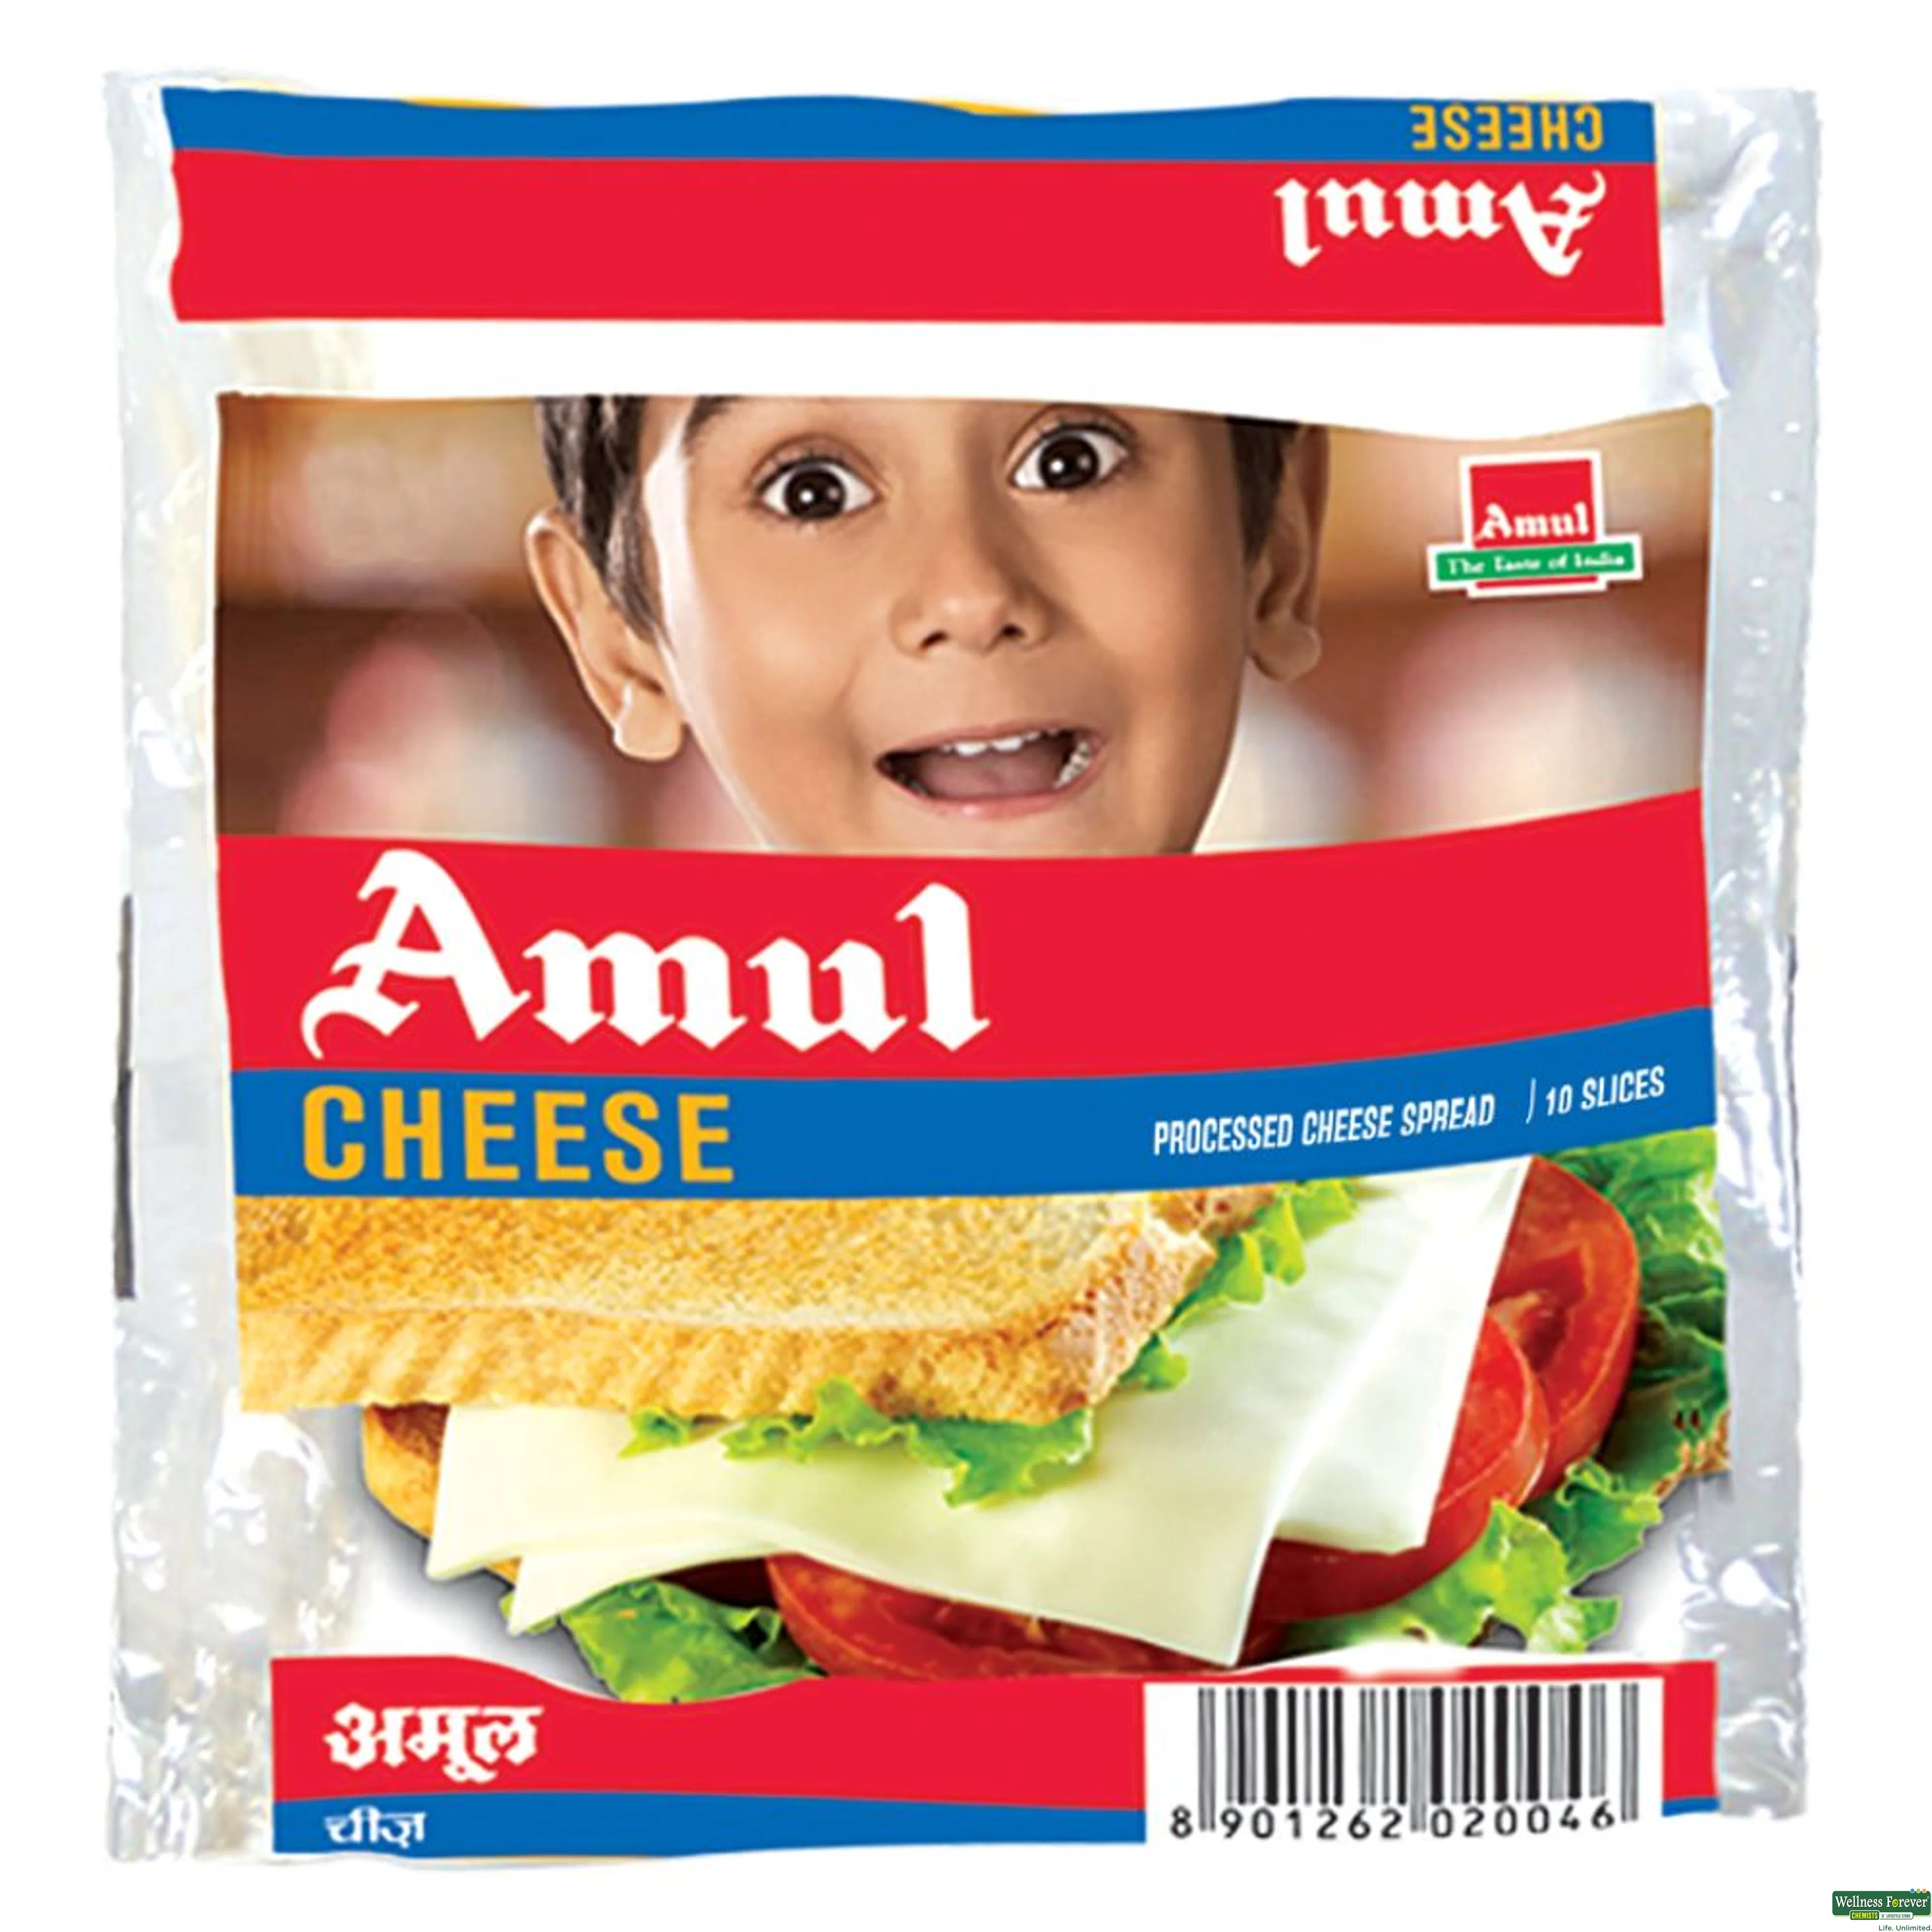 Buy Amul Slim Slim N Trim Skimmed Milk 1 Ltr Online At Best Price